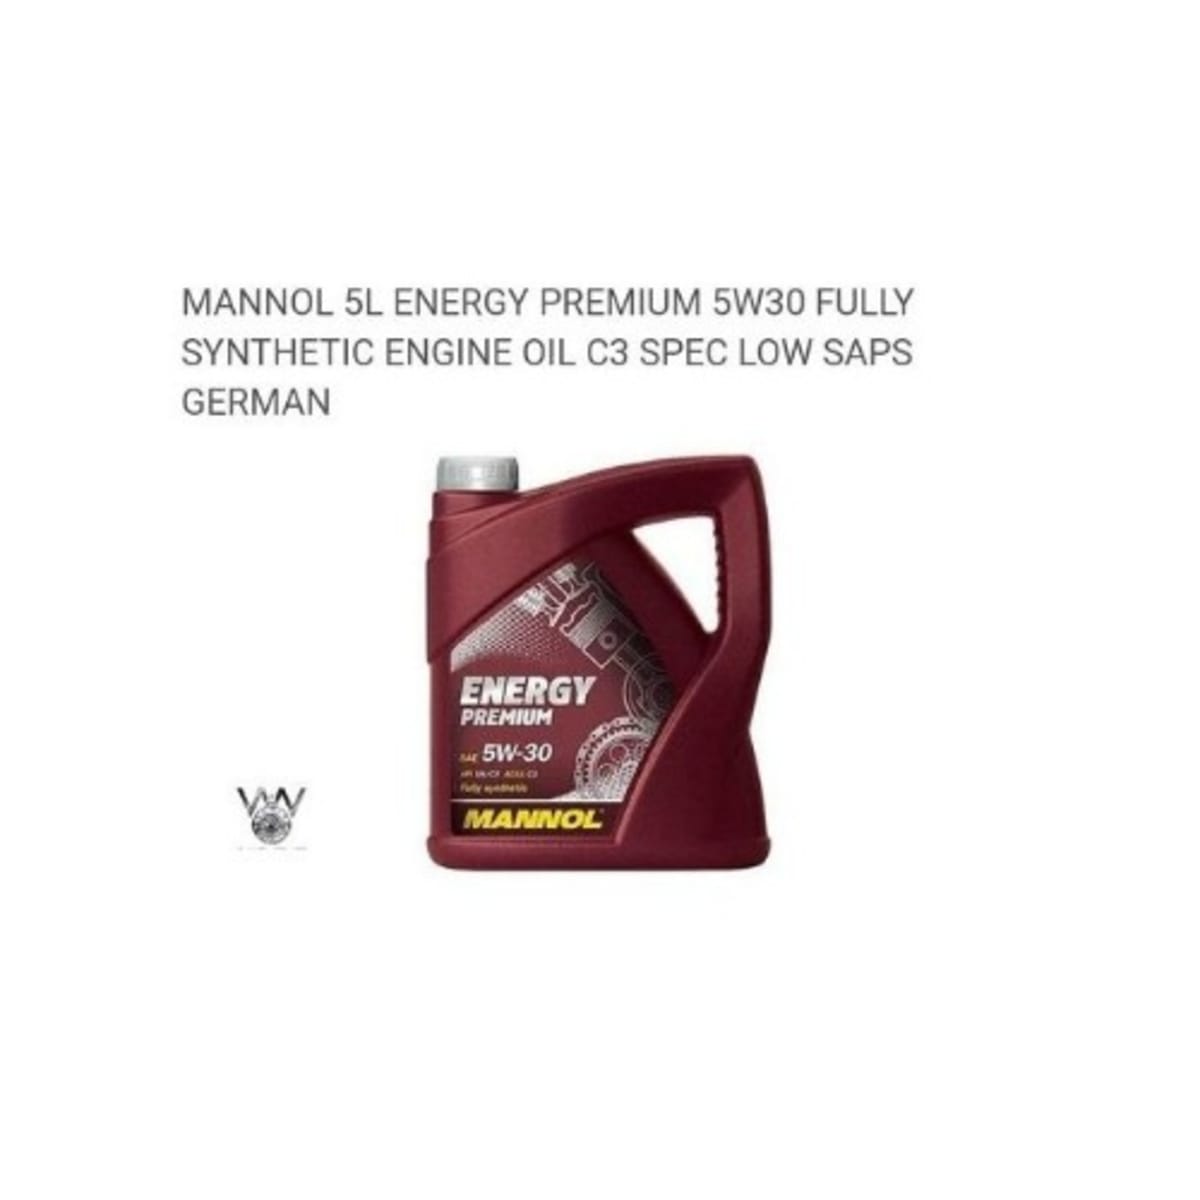 Mannol Full Synthetic Engine Oil Energy Premium 5w30